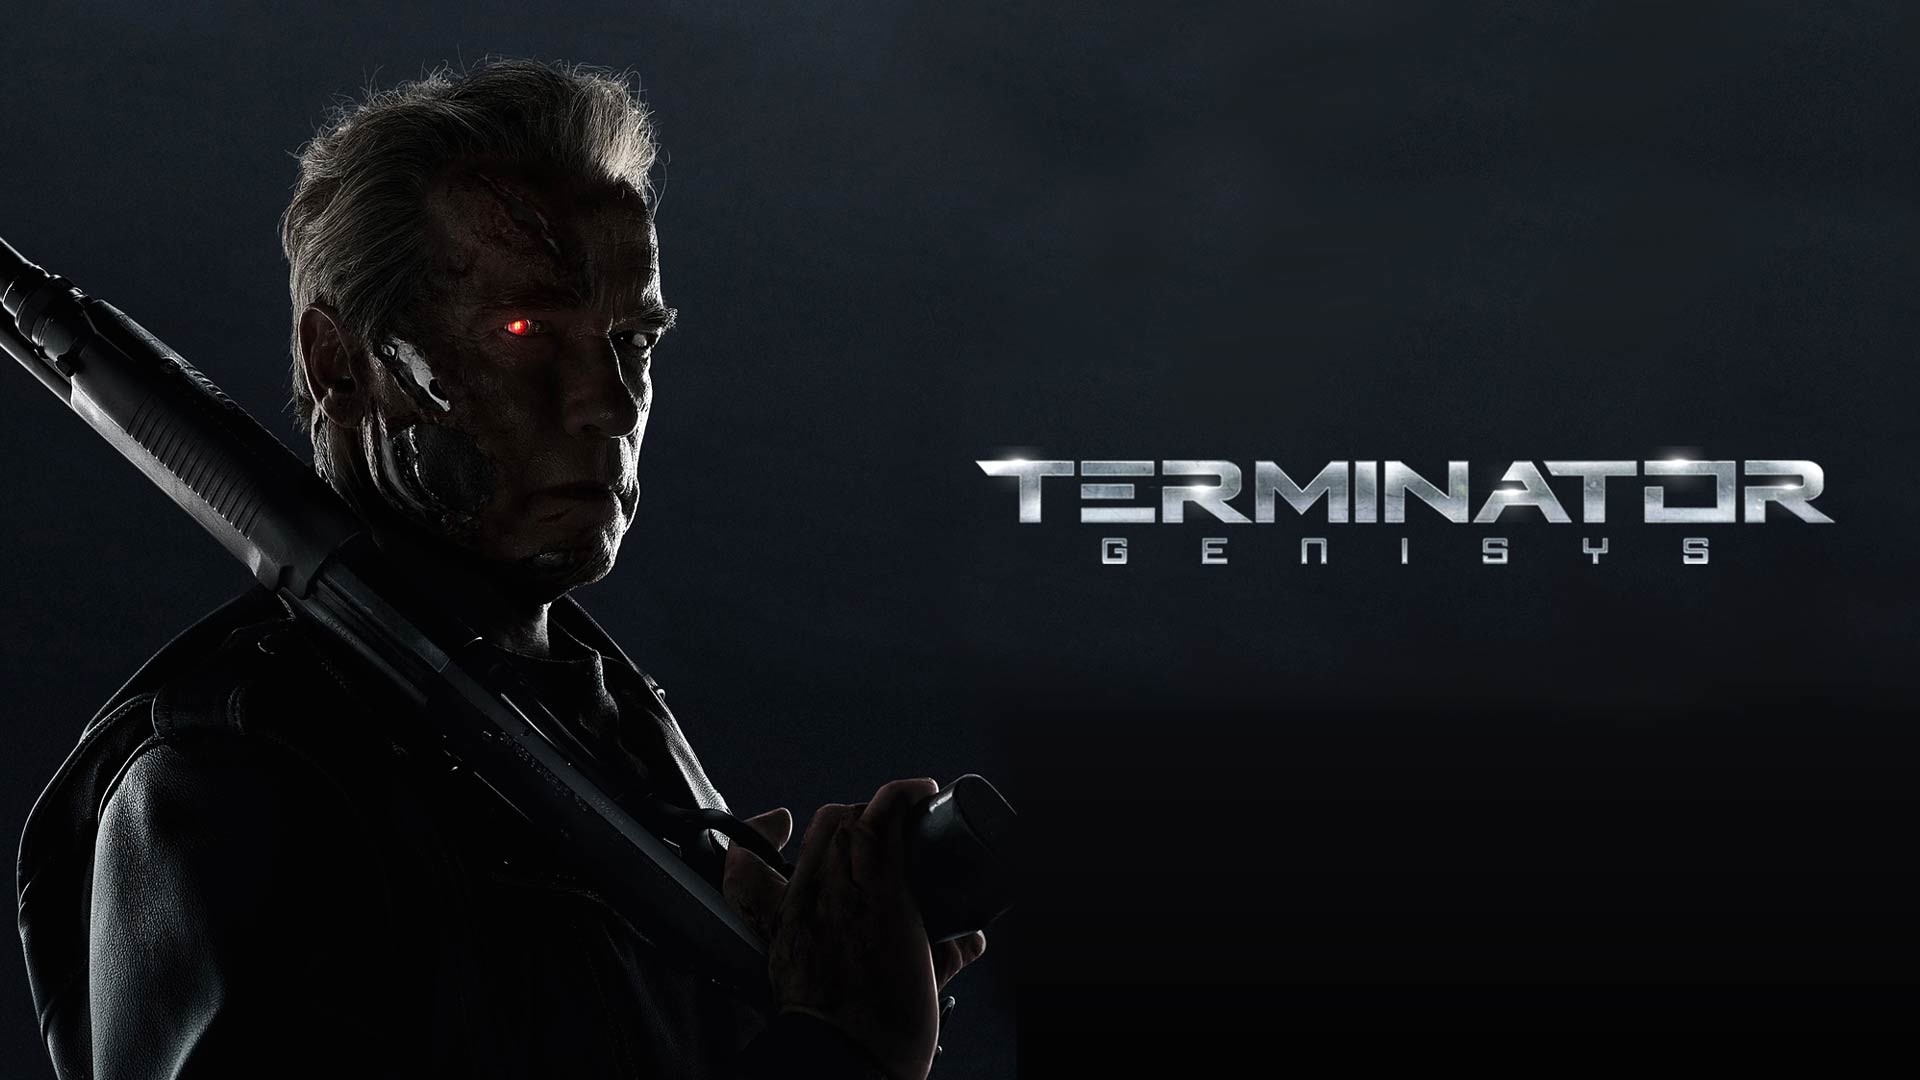 1920x1080 Terminator 5 Genisys 2015 movie wallpapers – Free full hd .